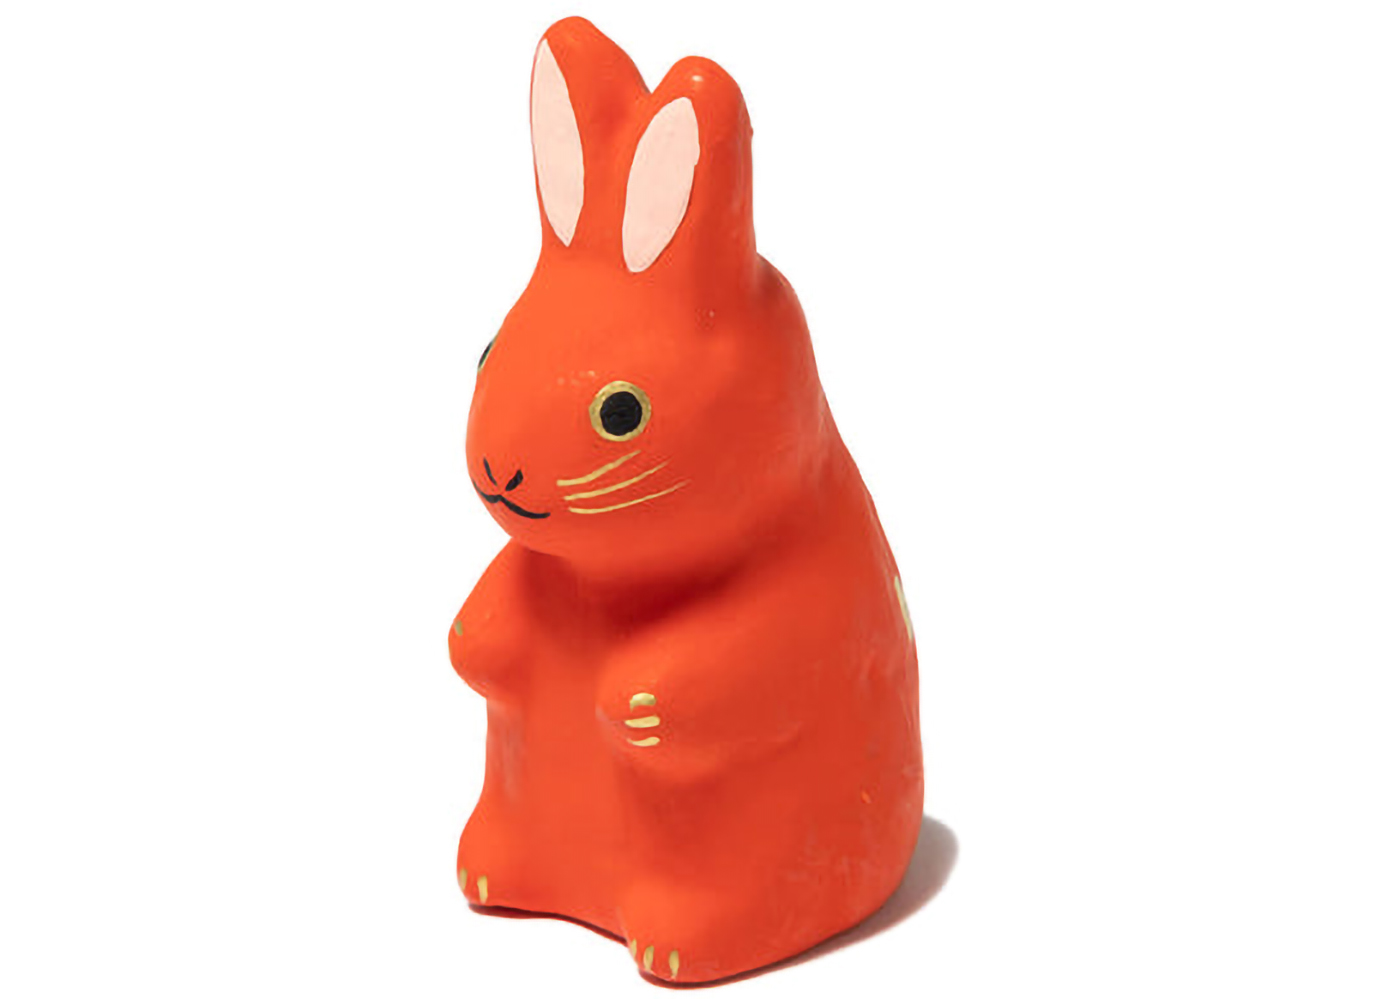 Human Made Rabbit Hariko Small Figure Red